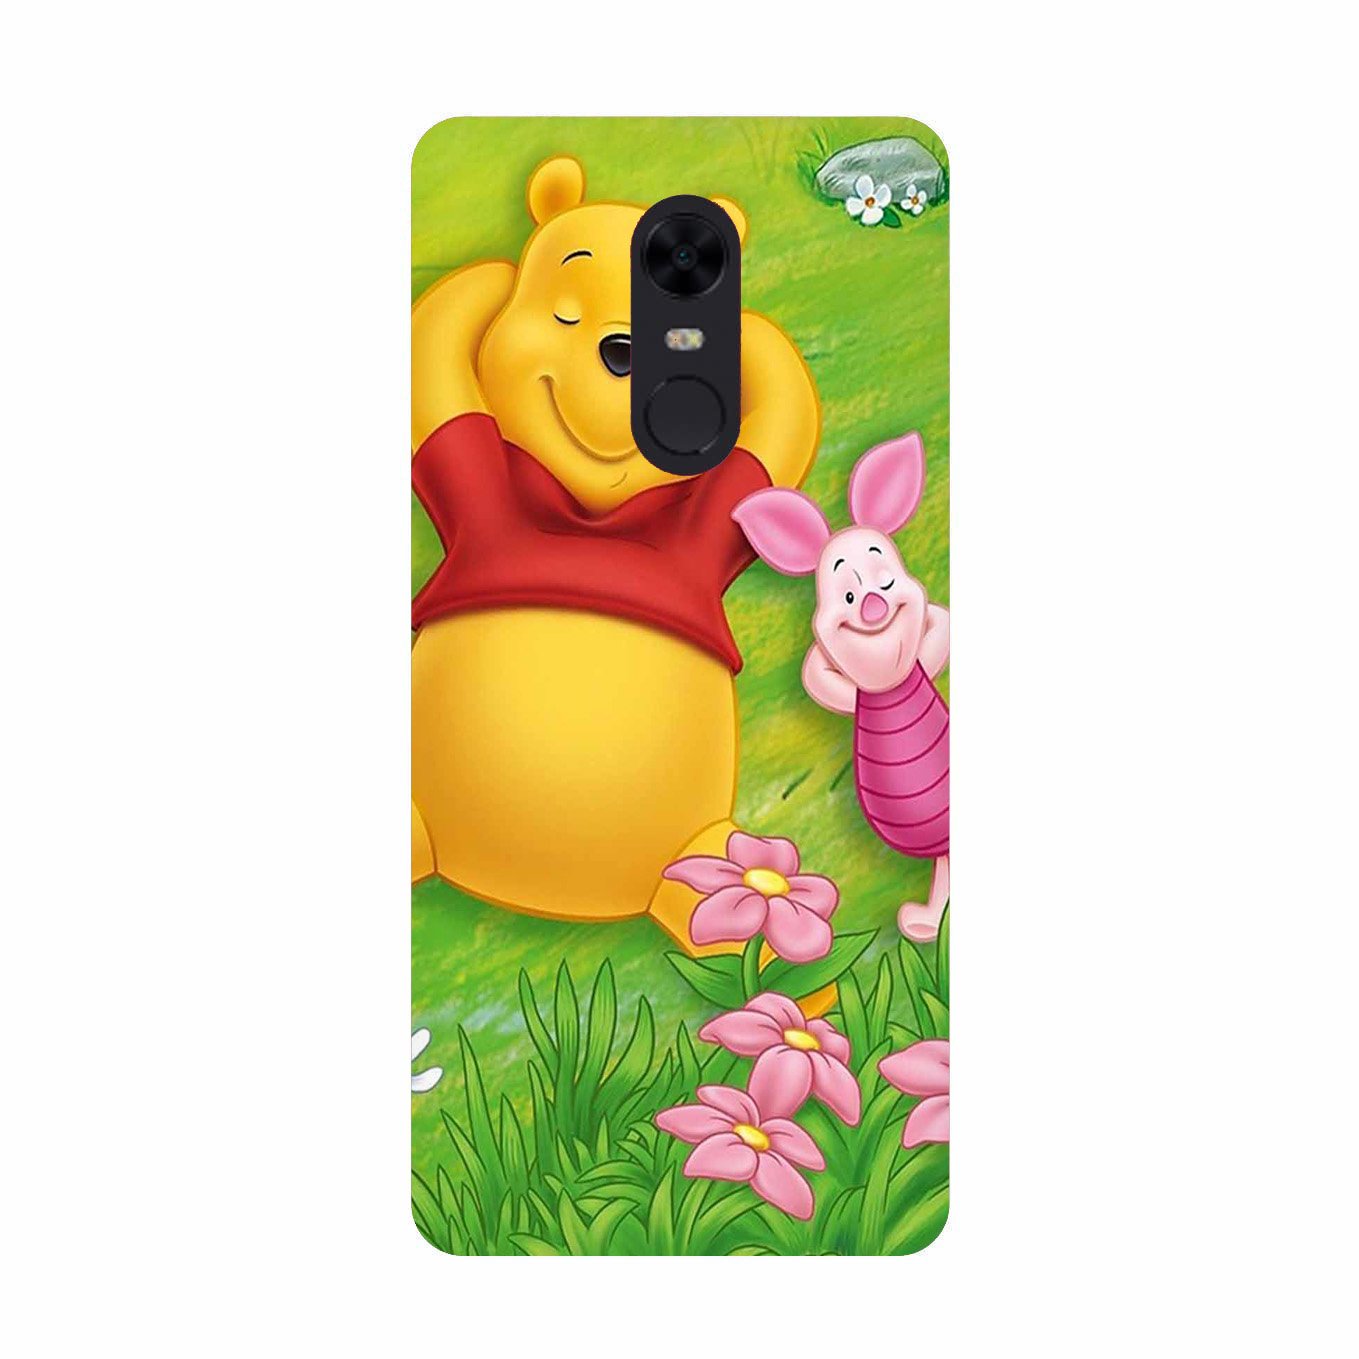 Winnie The Pooh Mobile Back Case for Redmi Note 4(Design - 348)